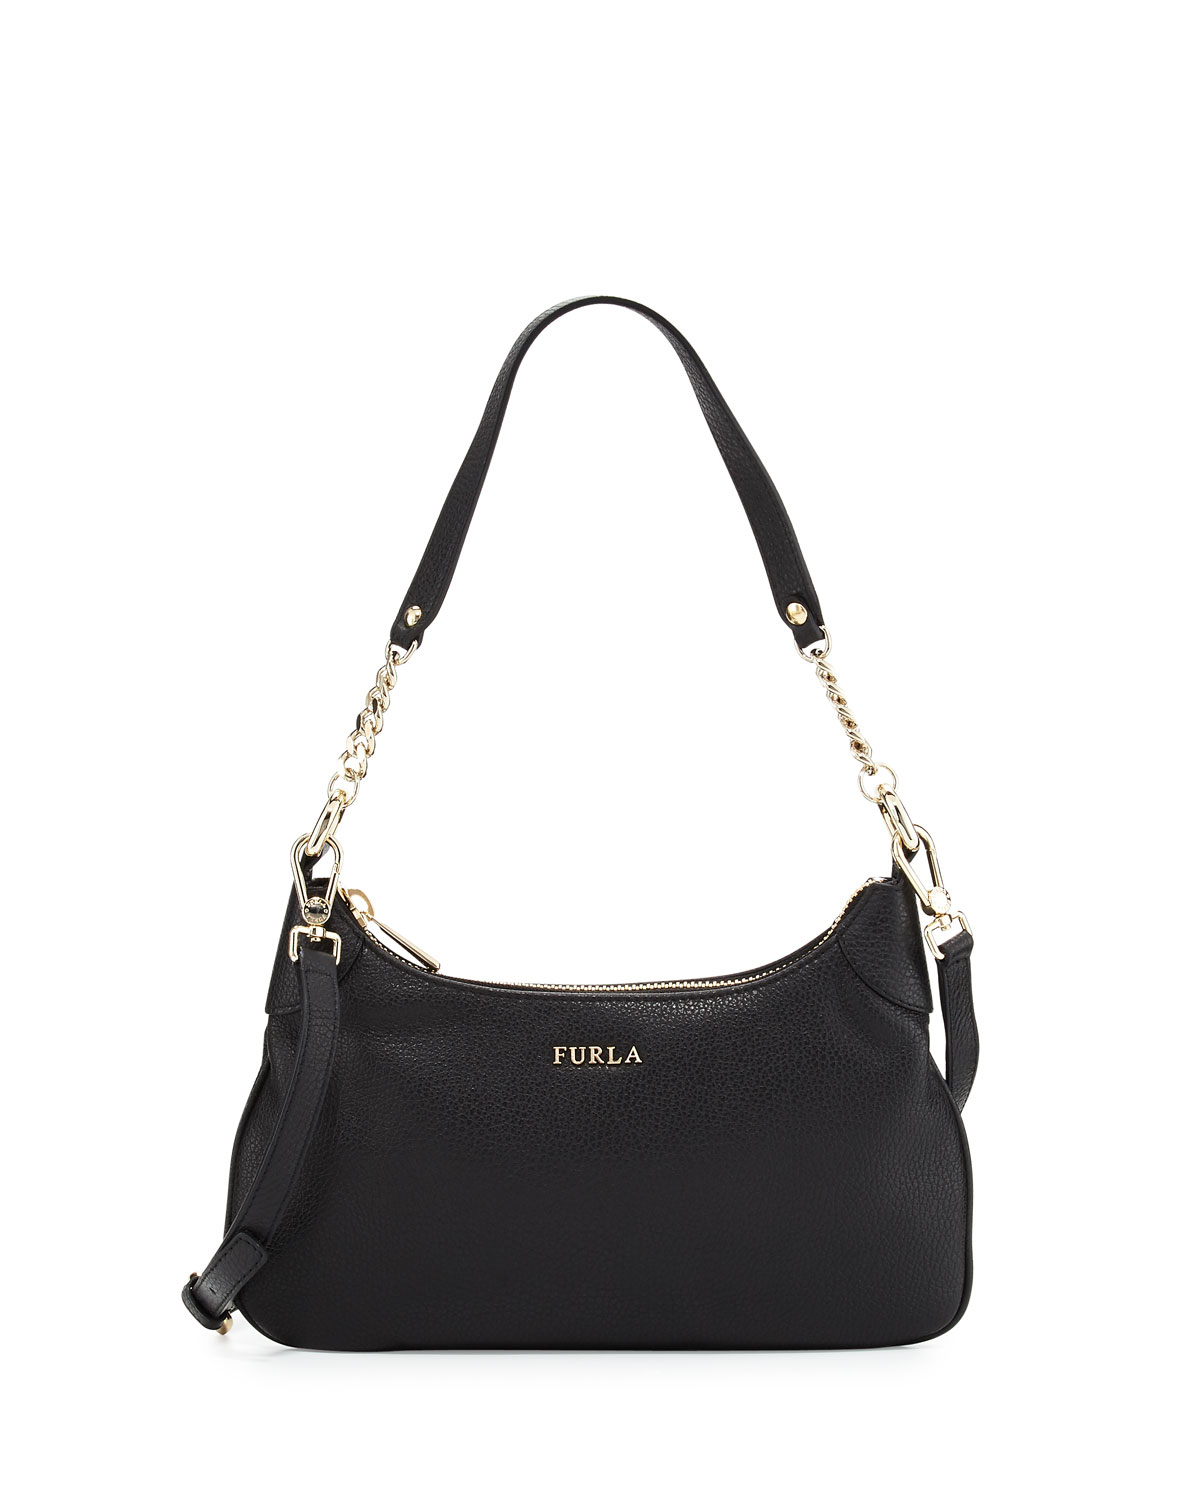 Lyst - Furla Julia Chain Small Leather Hobo Bag in Black